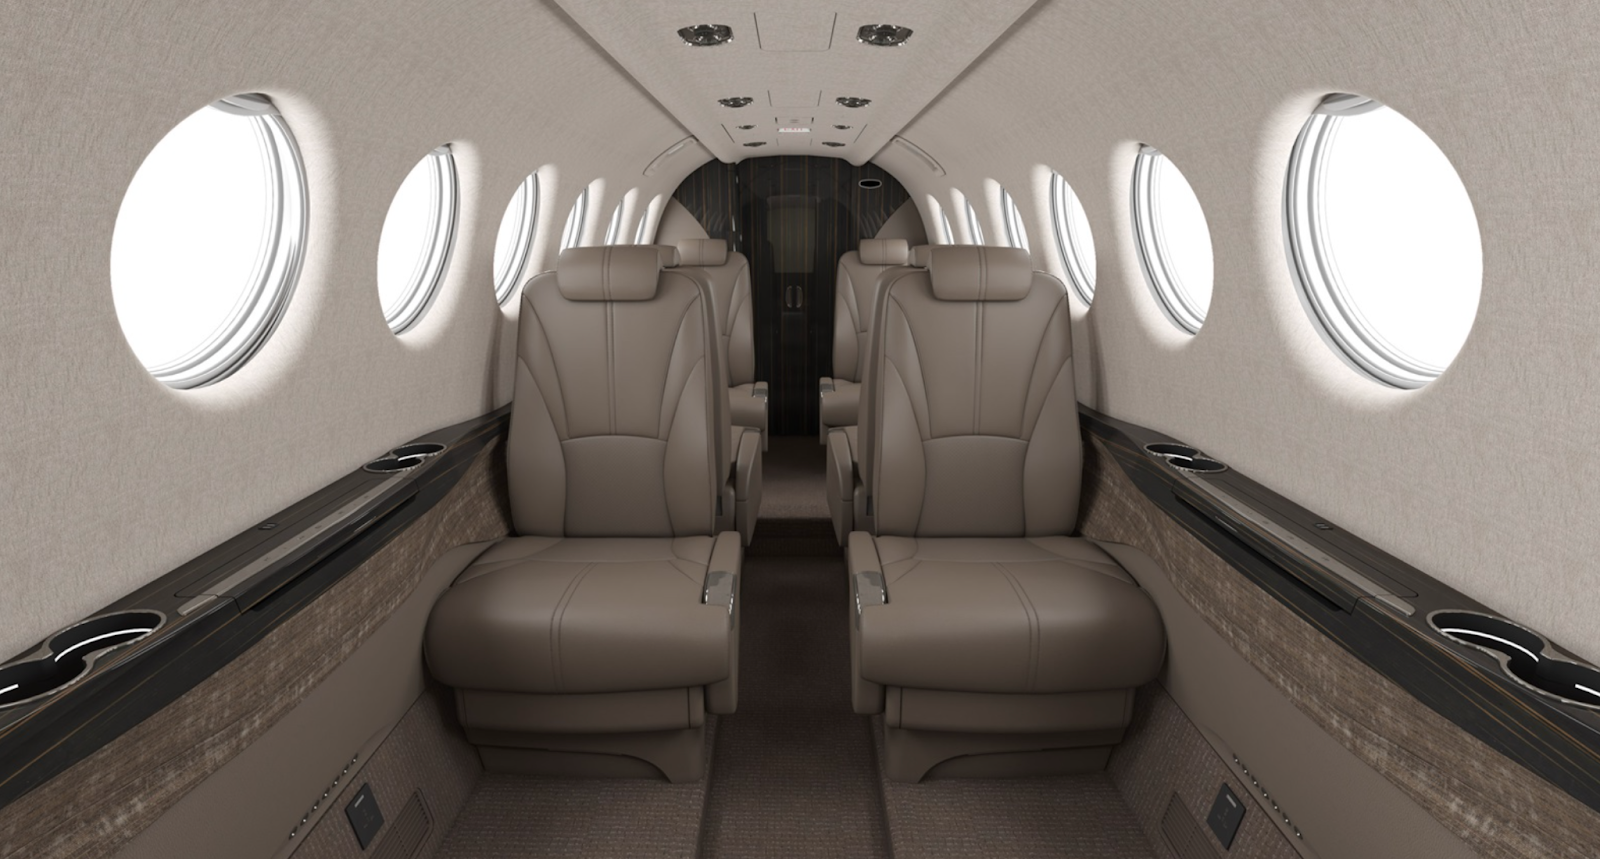 The interior of a King Air aircraft.